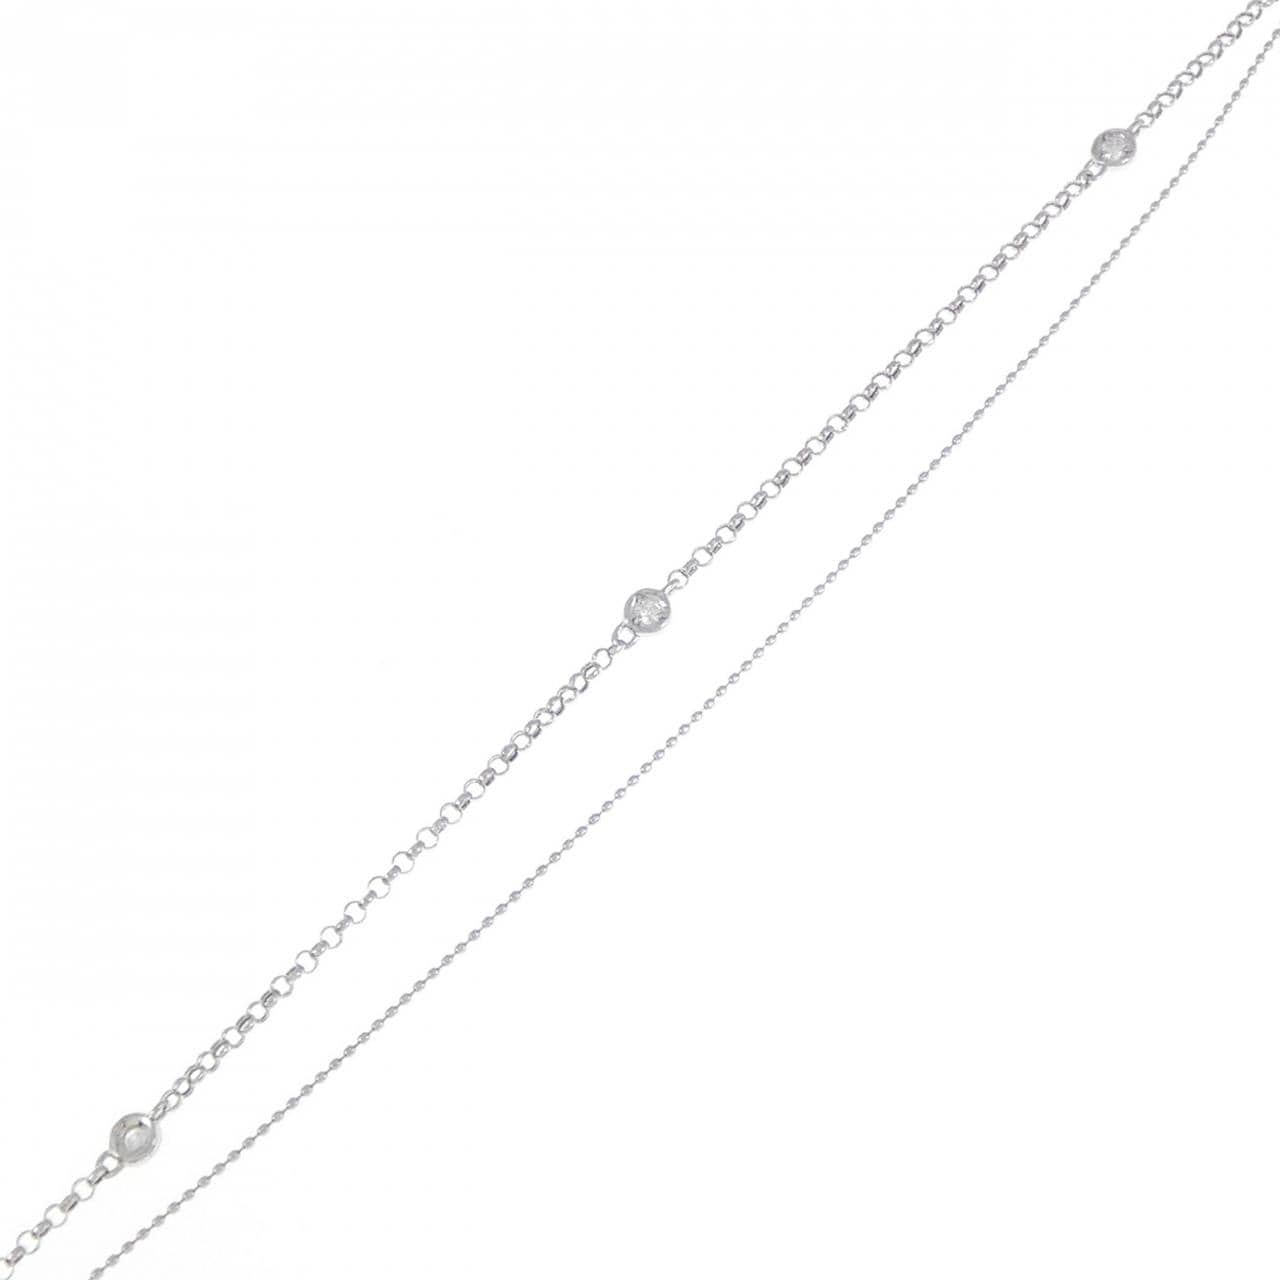 K18WG Diamond bracelet 0.10CT